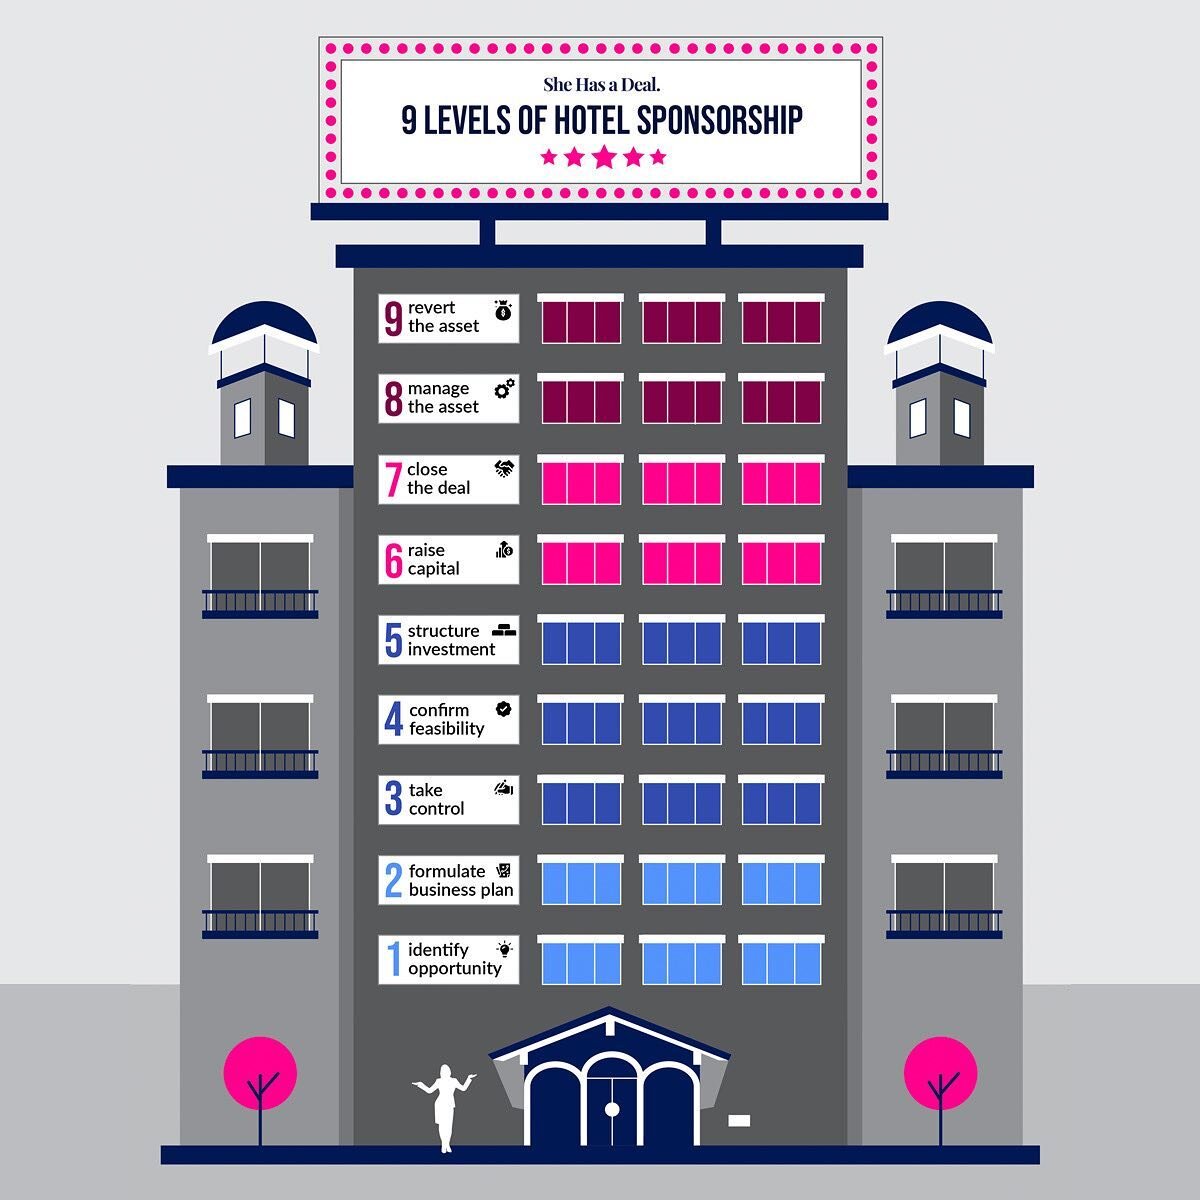 9 Levels of Hotel Sponsorship &ndash; Infographic 

#design#infographic#investment#blackownedbusiness#shehasadeal#hotel#creative#layout#follow#motivation#jadethedesigner#guide#education#visualart#graphics#digitalillustration